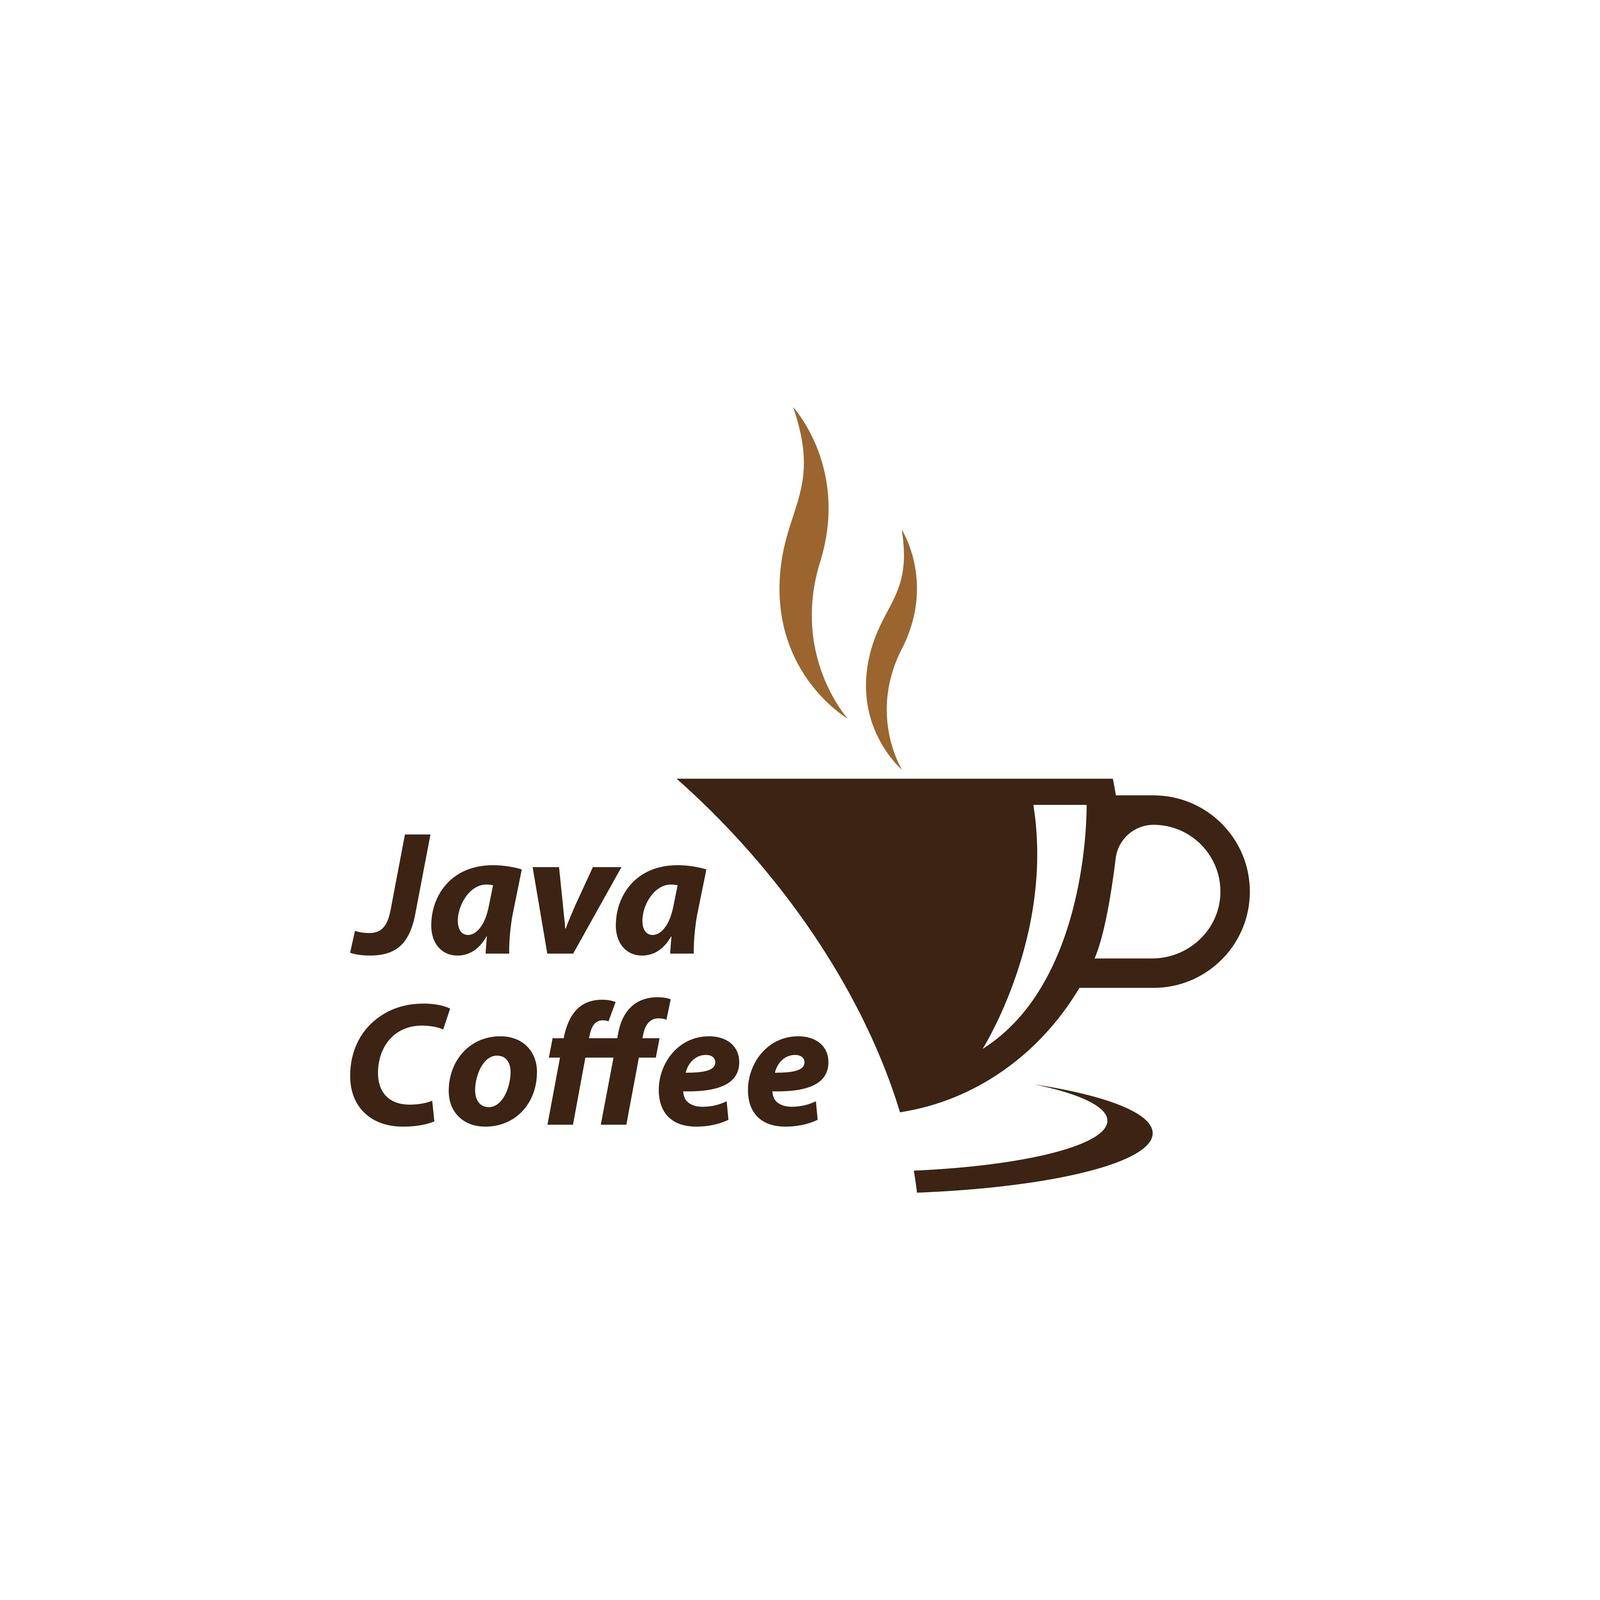 Java coffee logo vector icon design